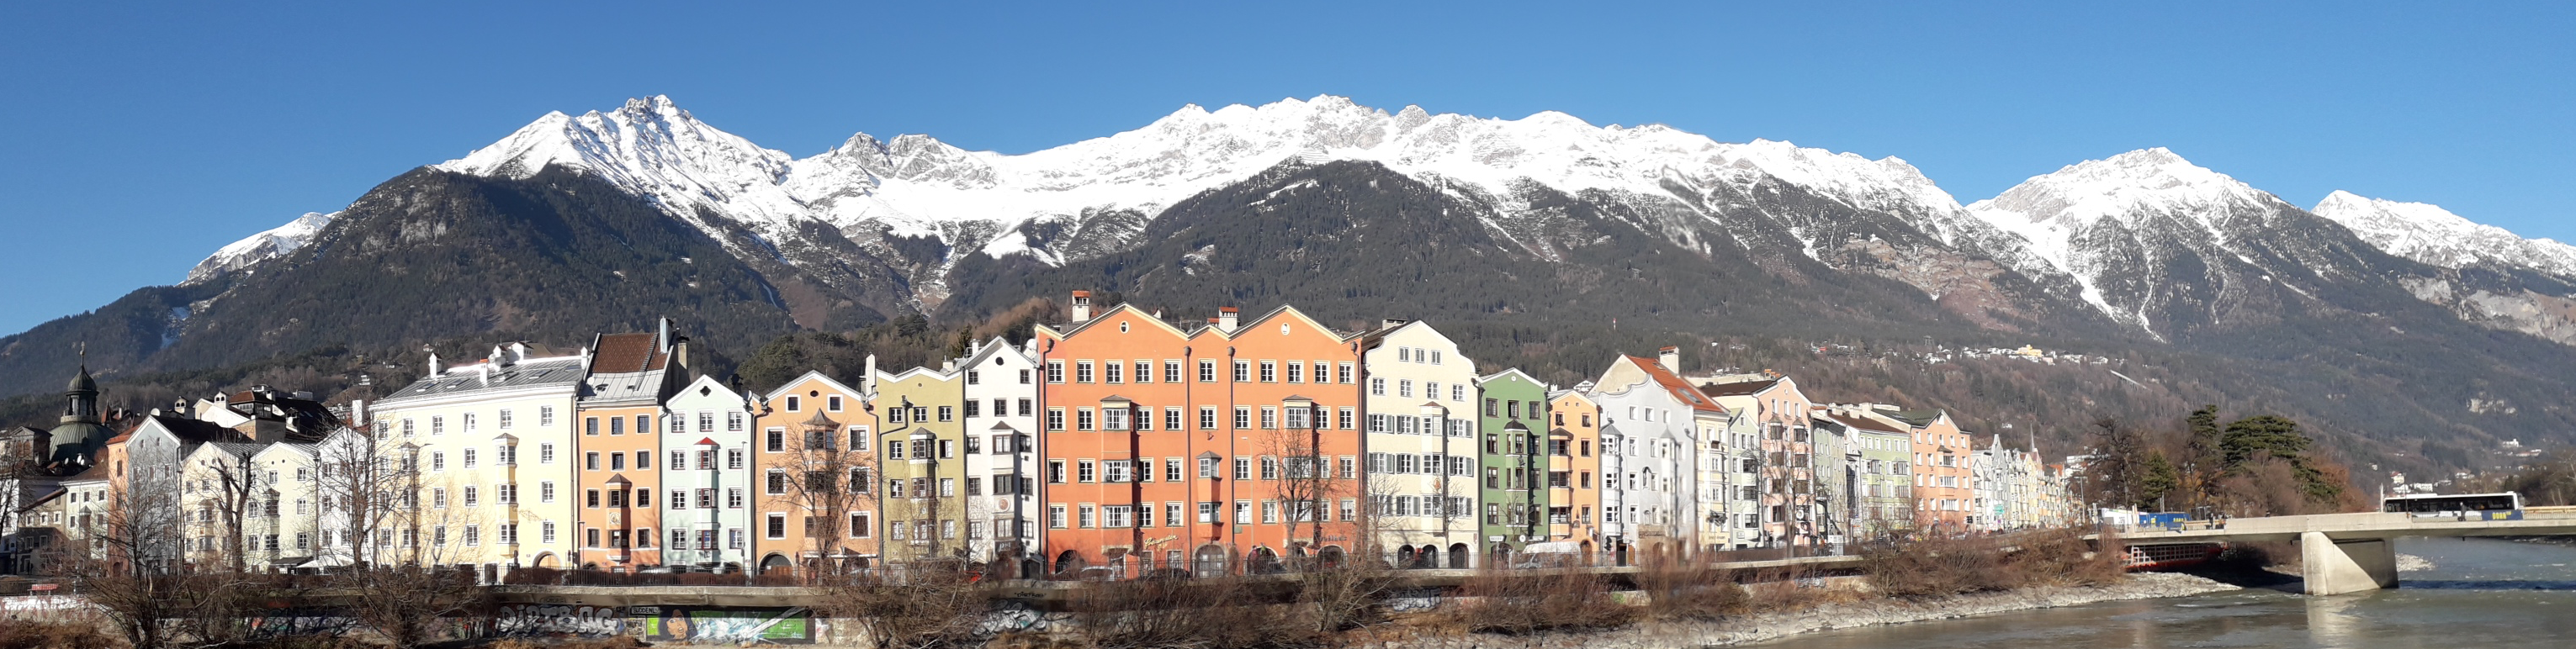 Innsbruck winter